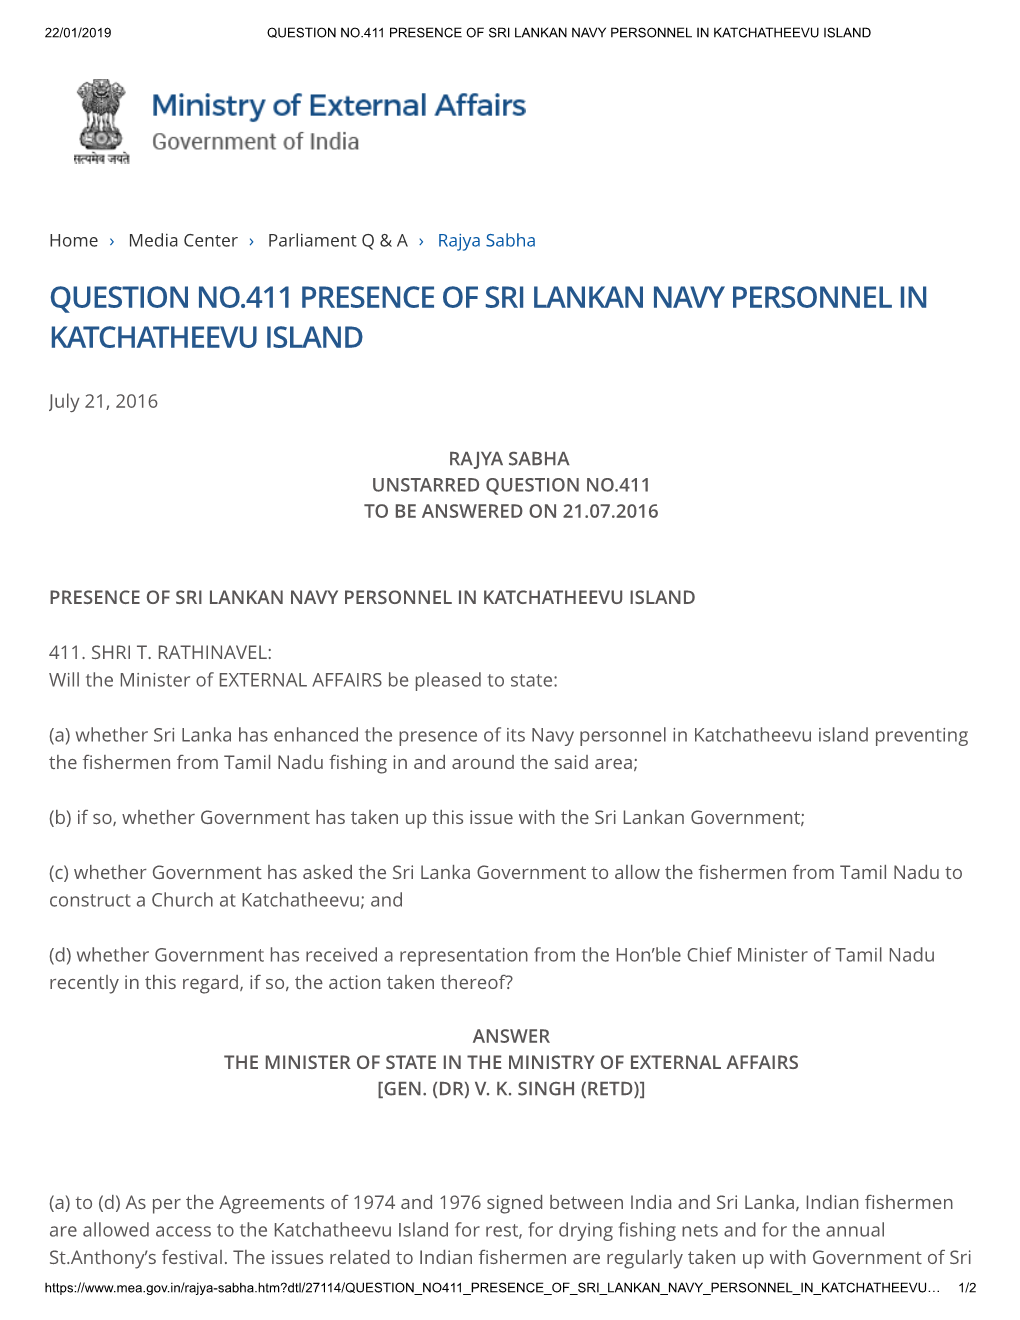 Question No.411 Presence of Sri Lankan Navy Personnel in Katchatheevu Island